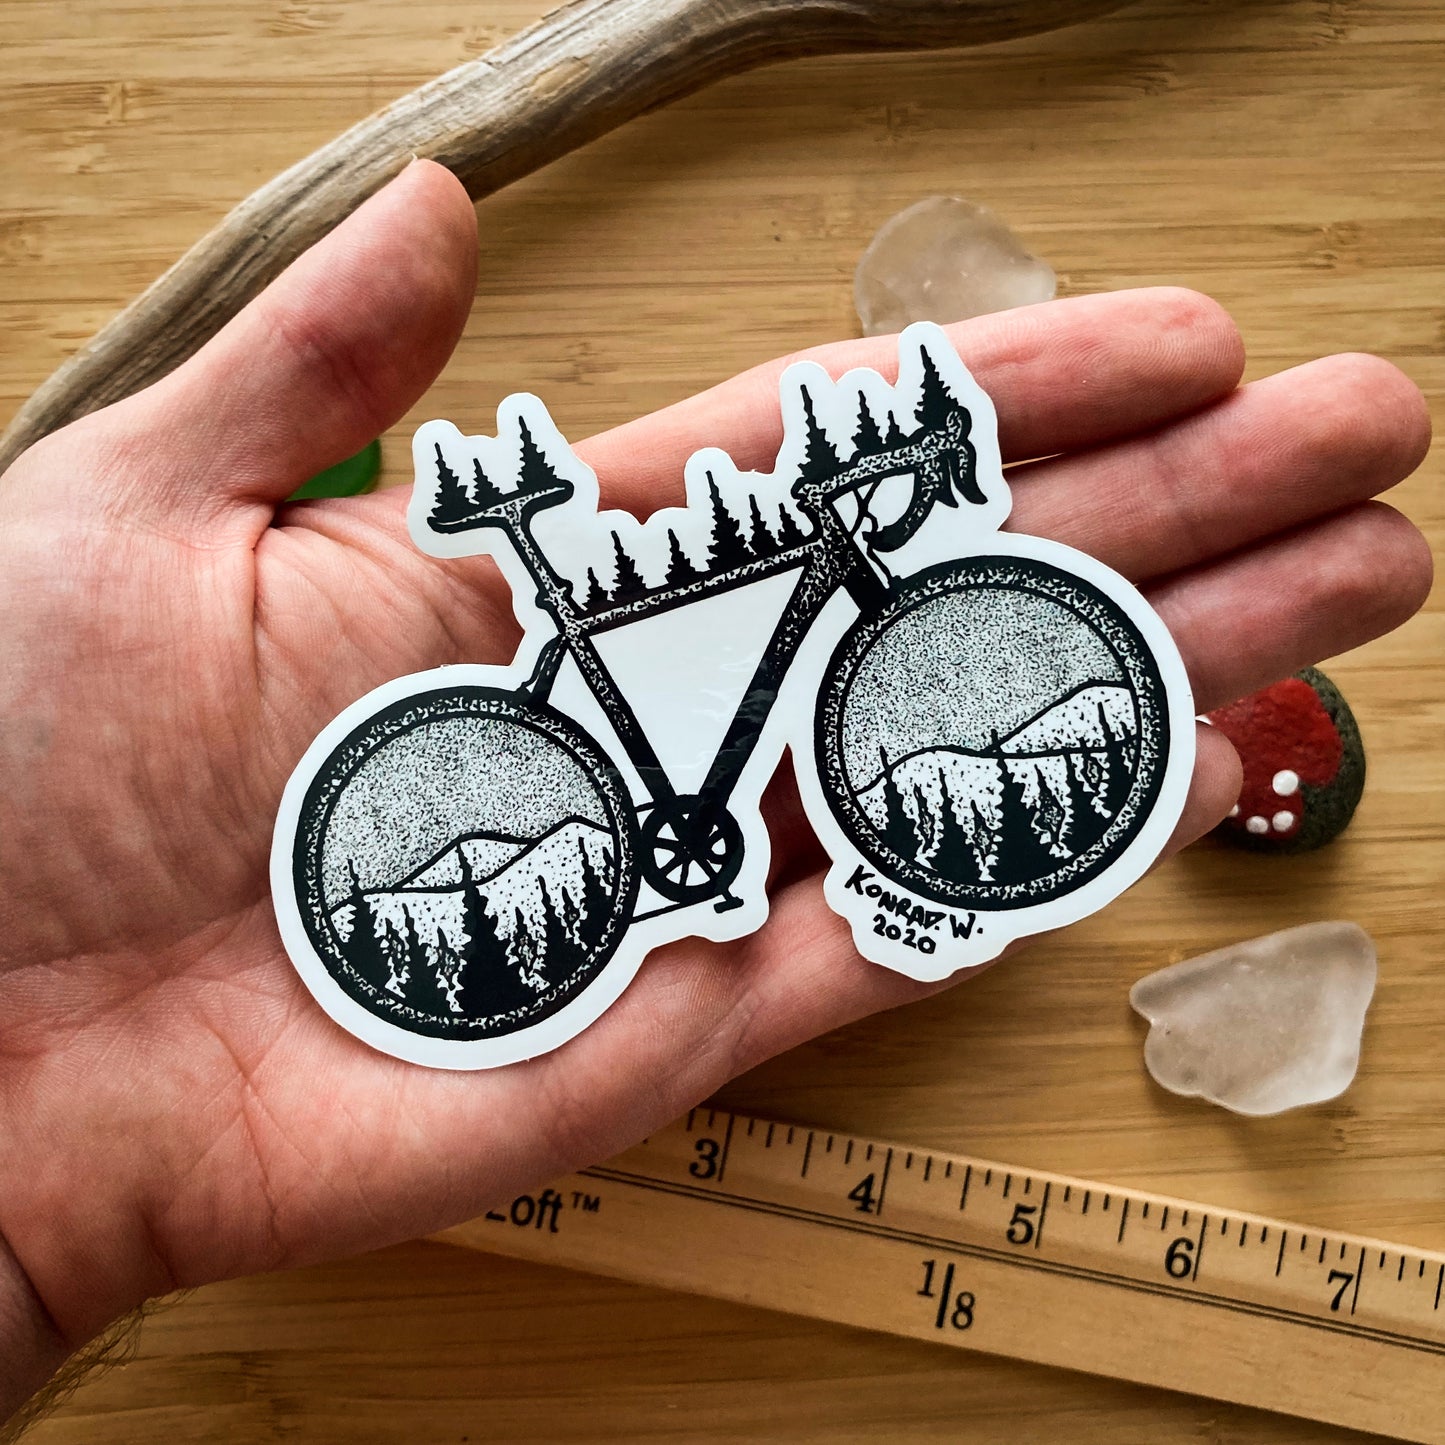 Road Bike Sticker